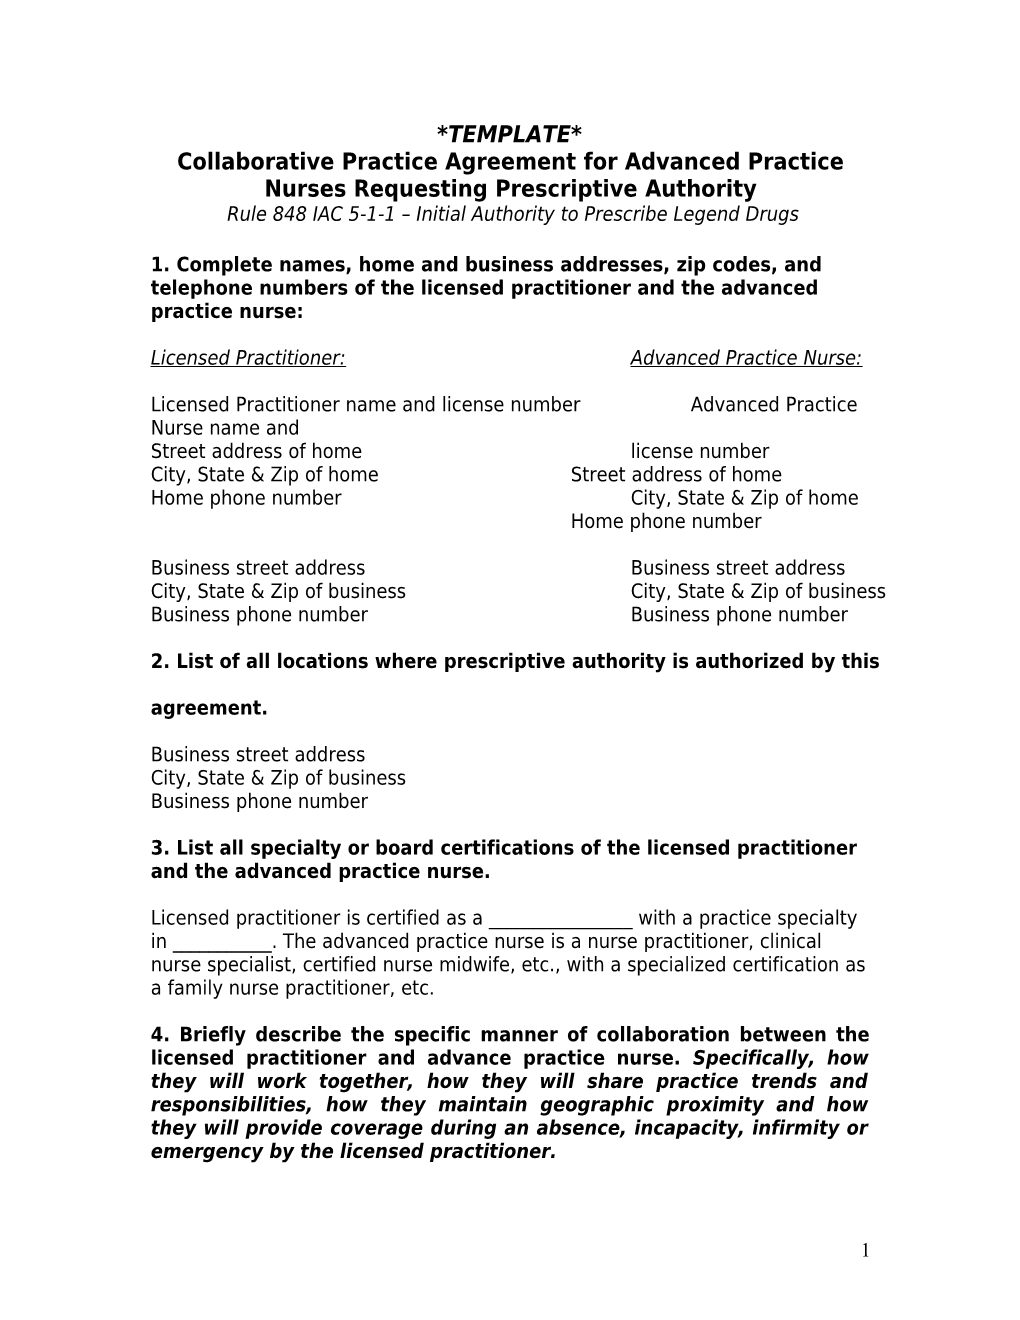 Example Collaborative Practice Agreement for Advanced Practice Nurses Requesting Prescriptive